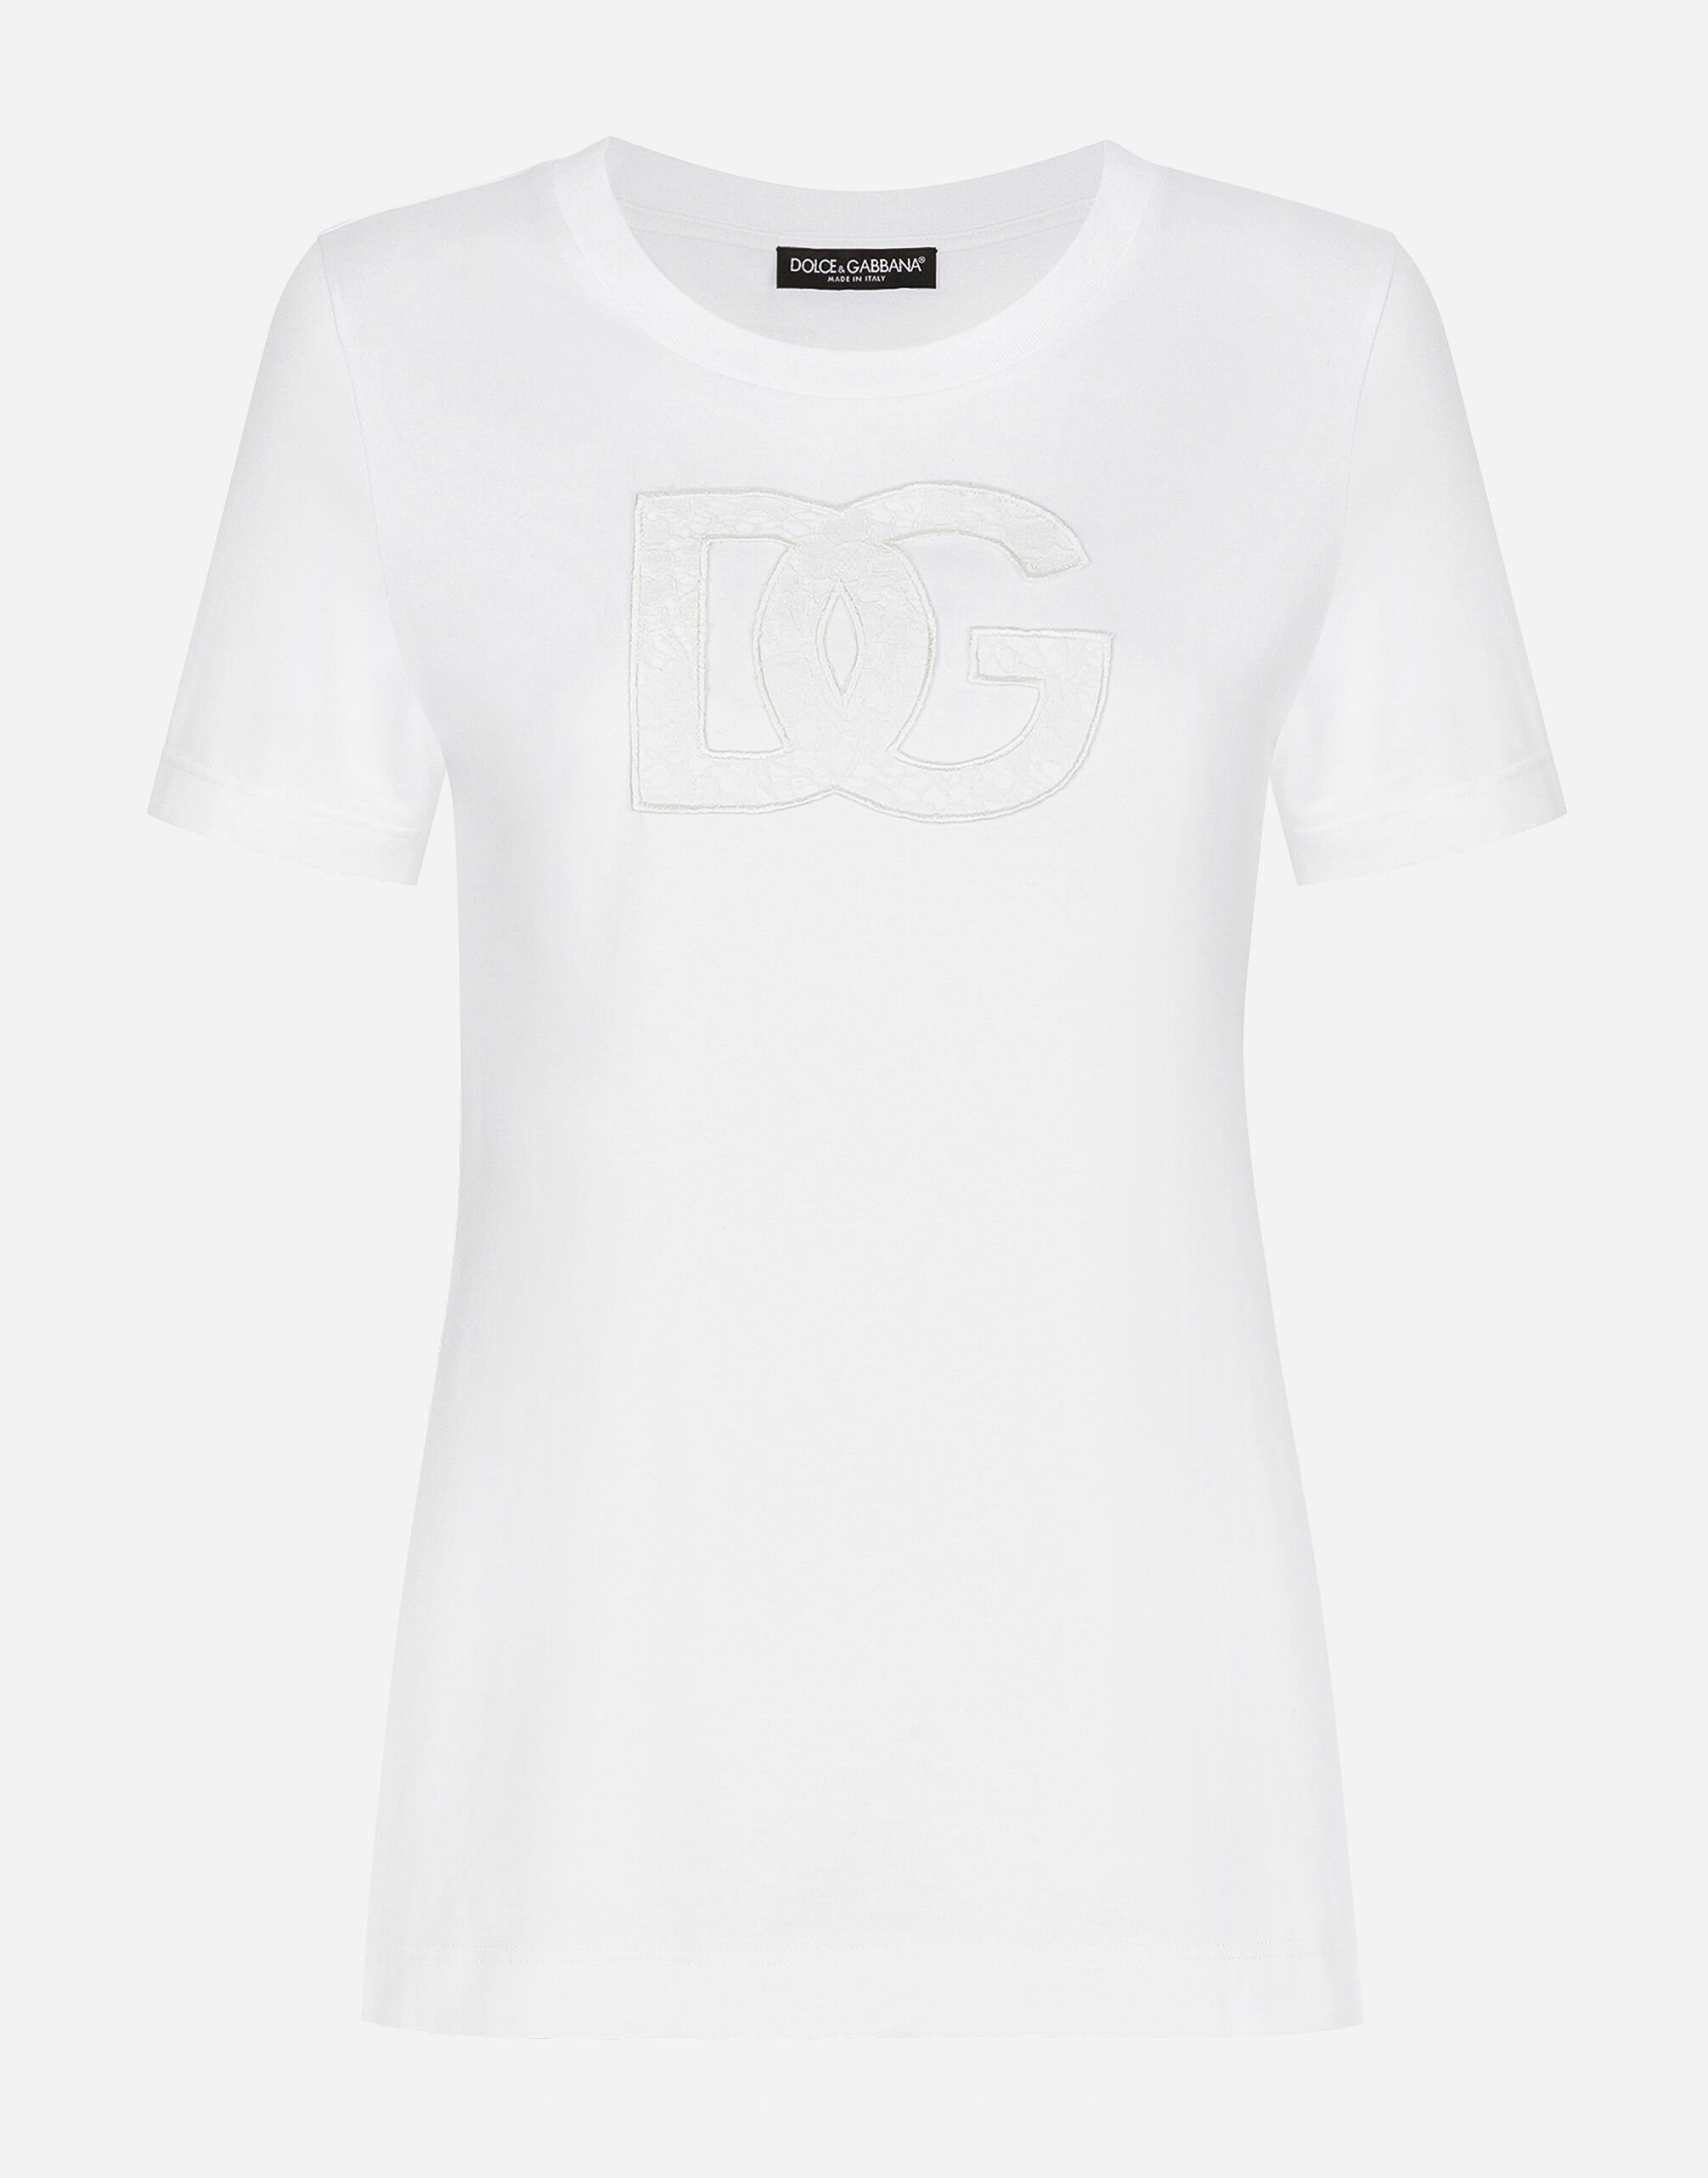 Women's T-shirts, sweatshirts, and hoodies | Dolce&Gabbana®